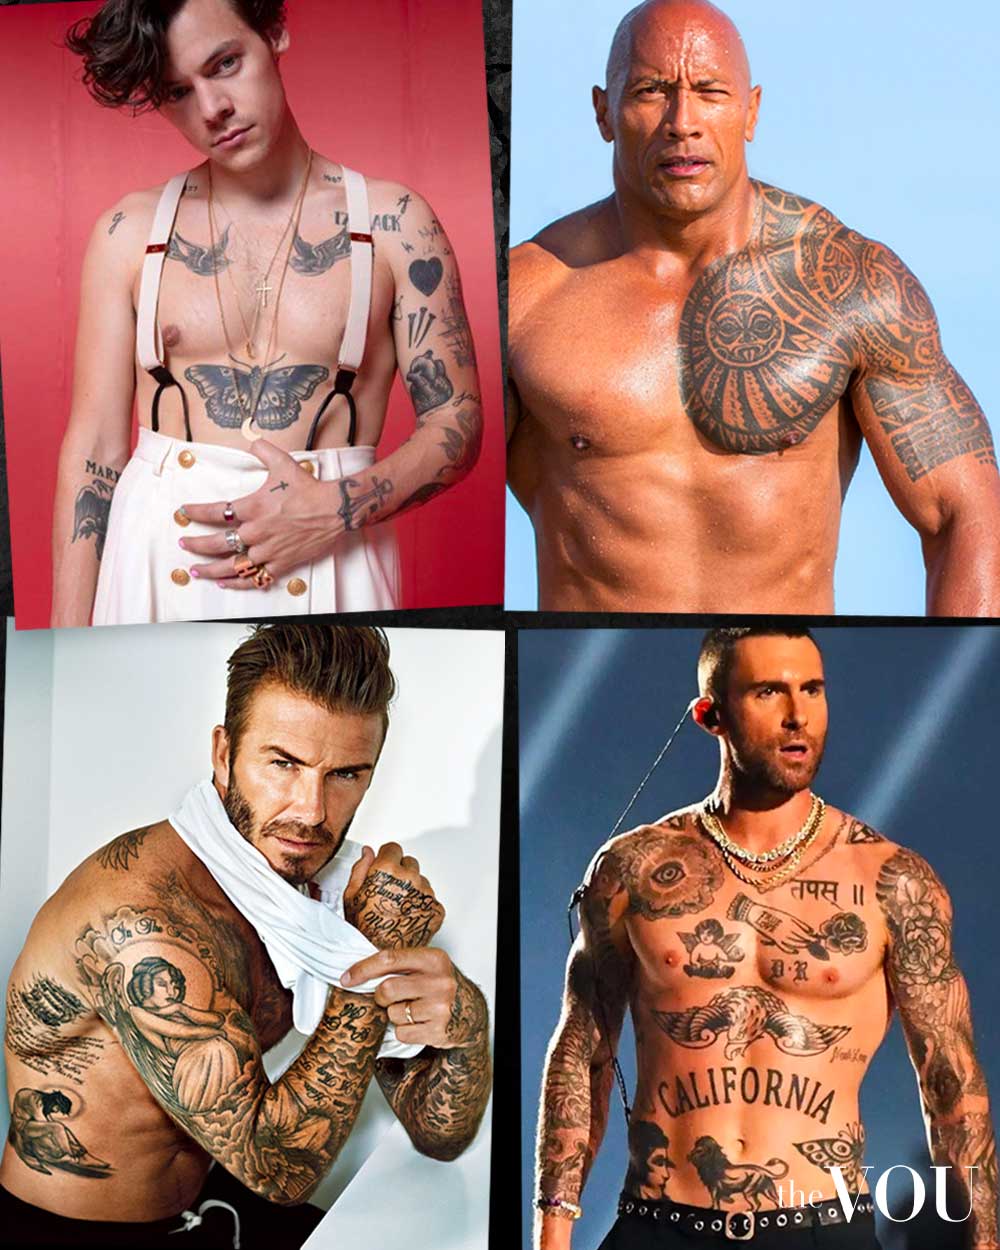 15 Best Shoulder Tattoo Designs for Men and Women